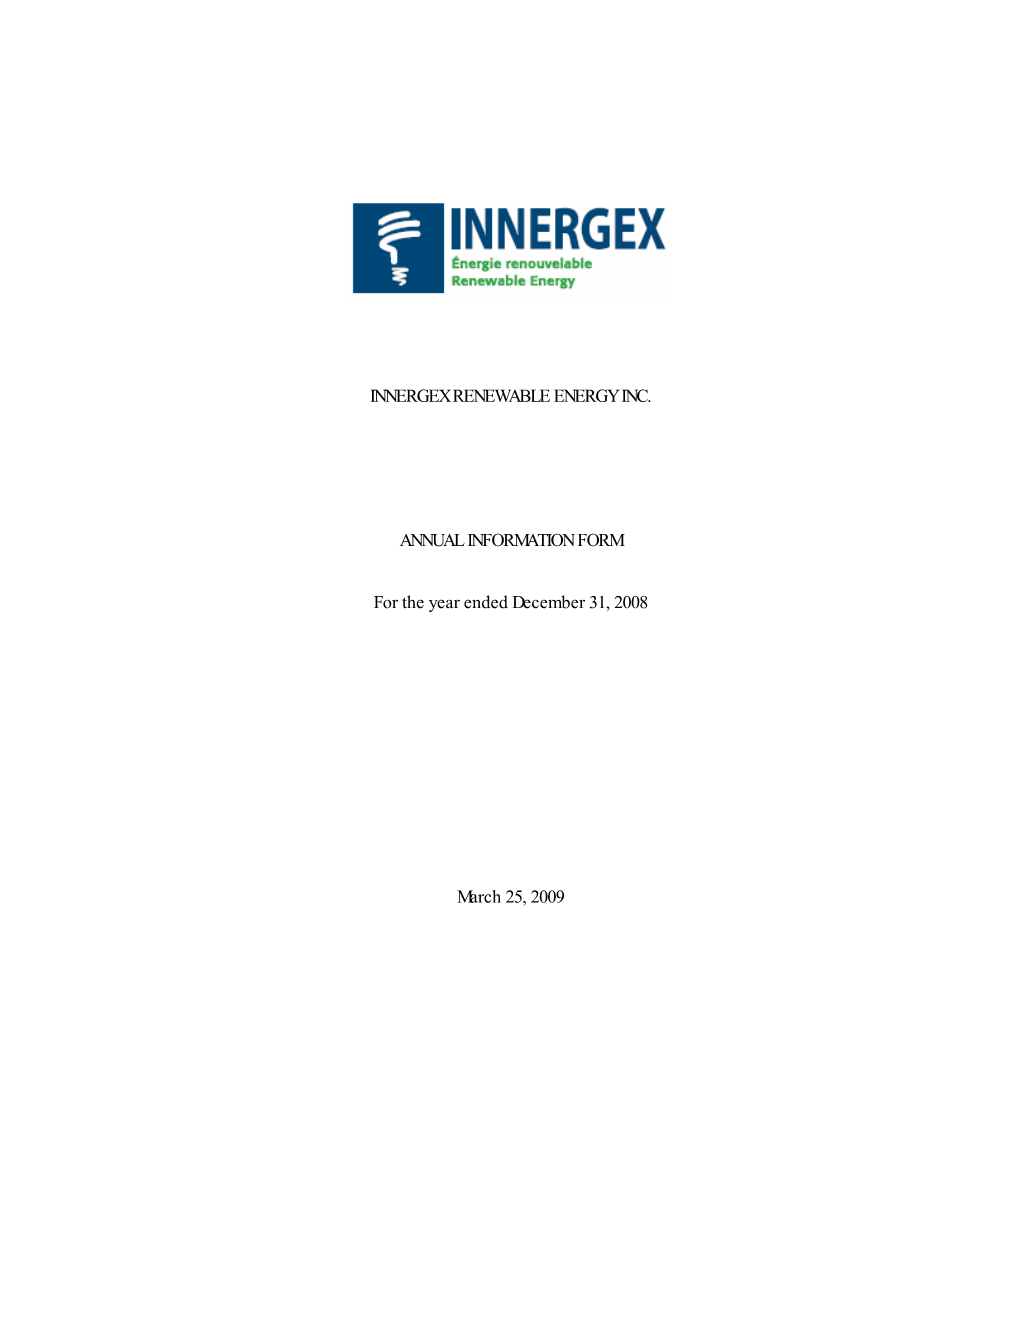 Innergex Renewable Energy Inc. Annual Information